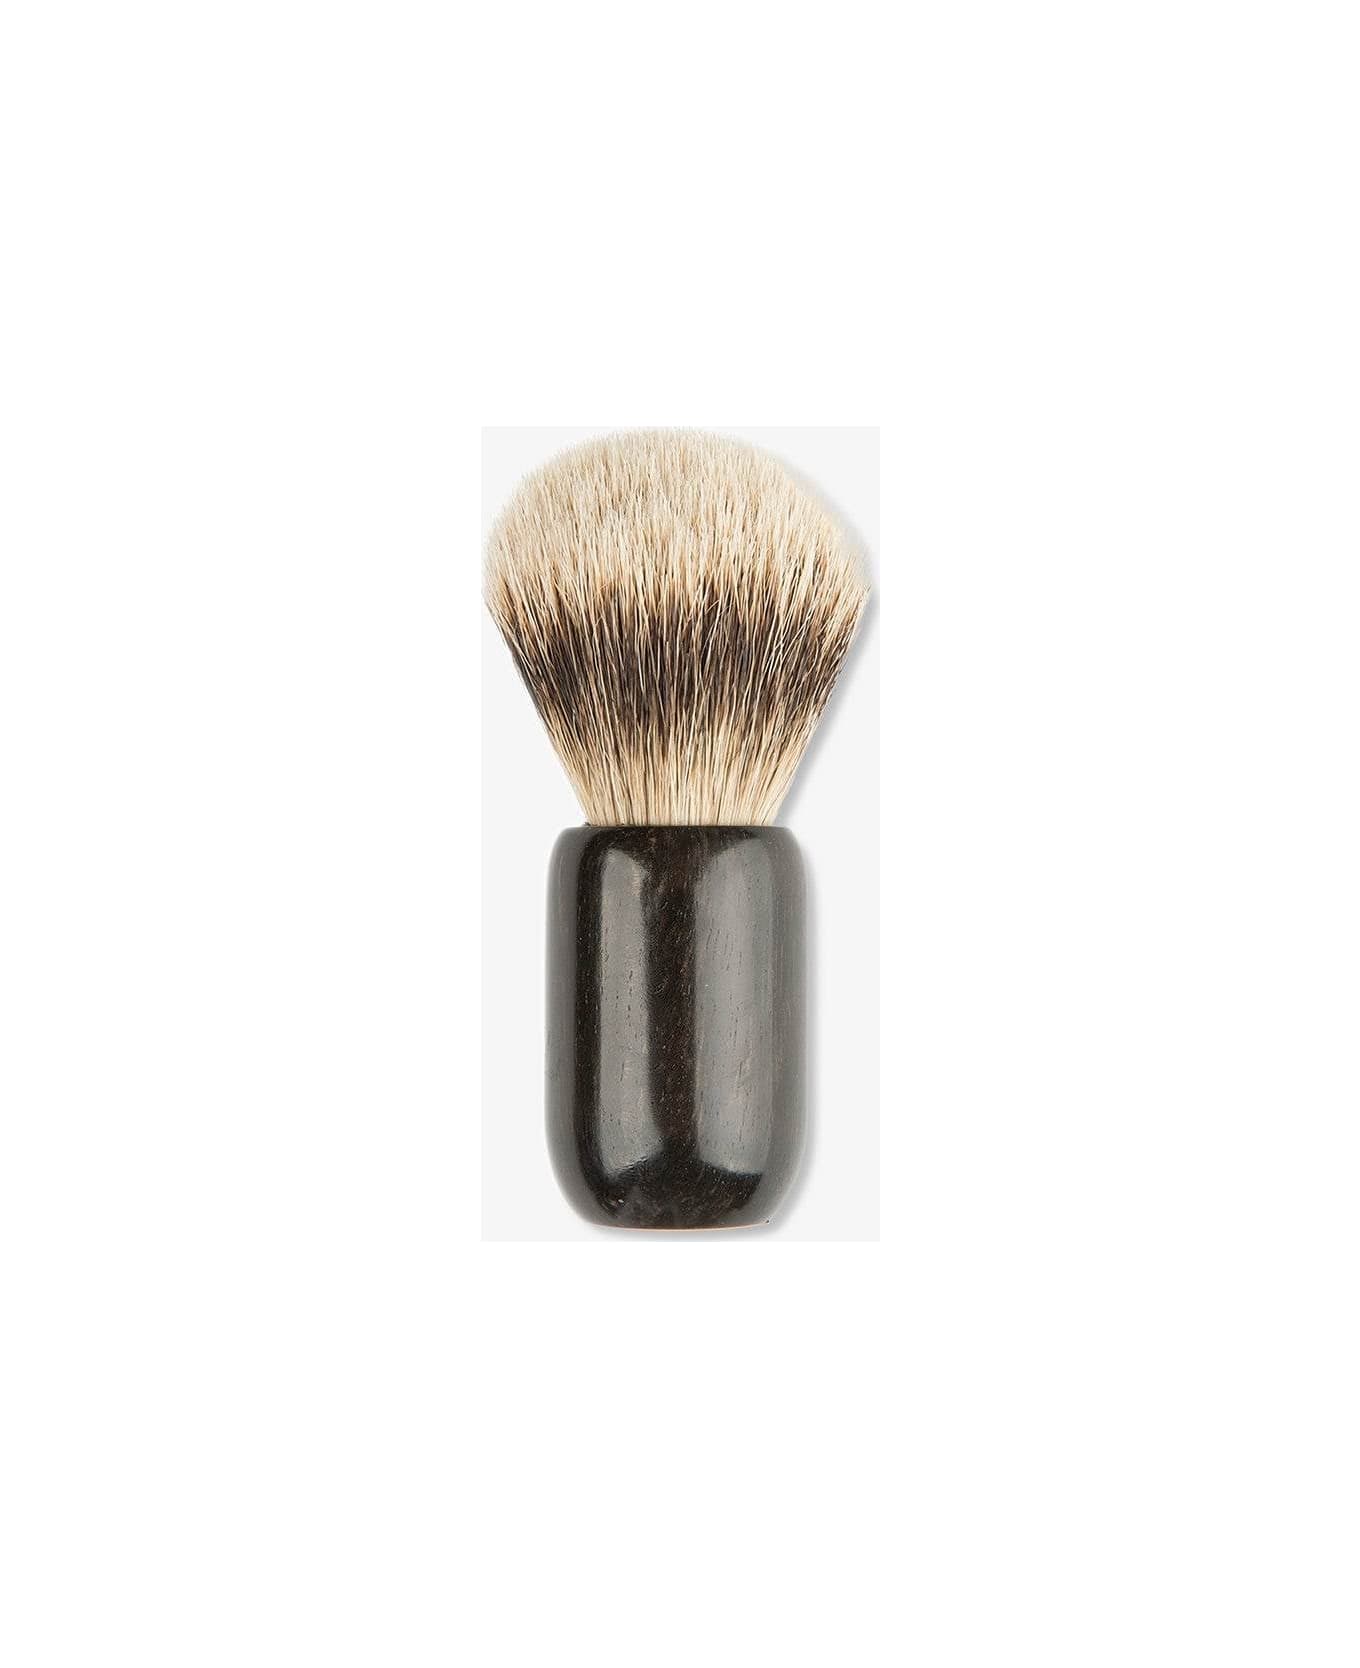 Larusmiani Shaving Brush 'g. D'annunzio' Beauty - Neutral